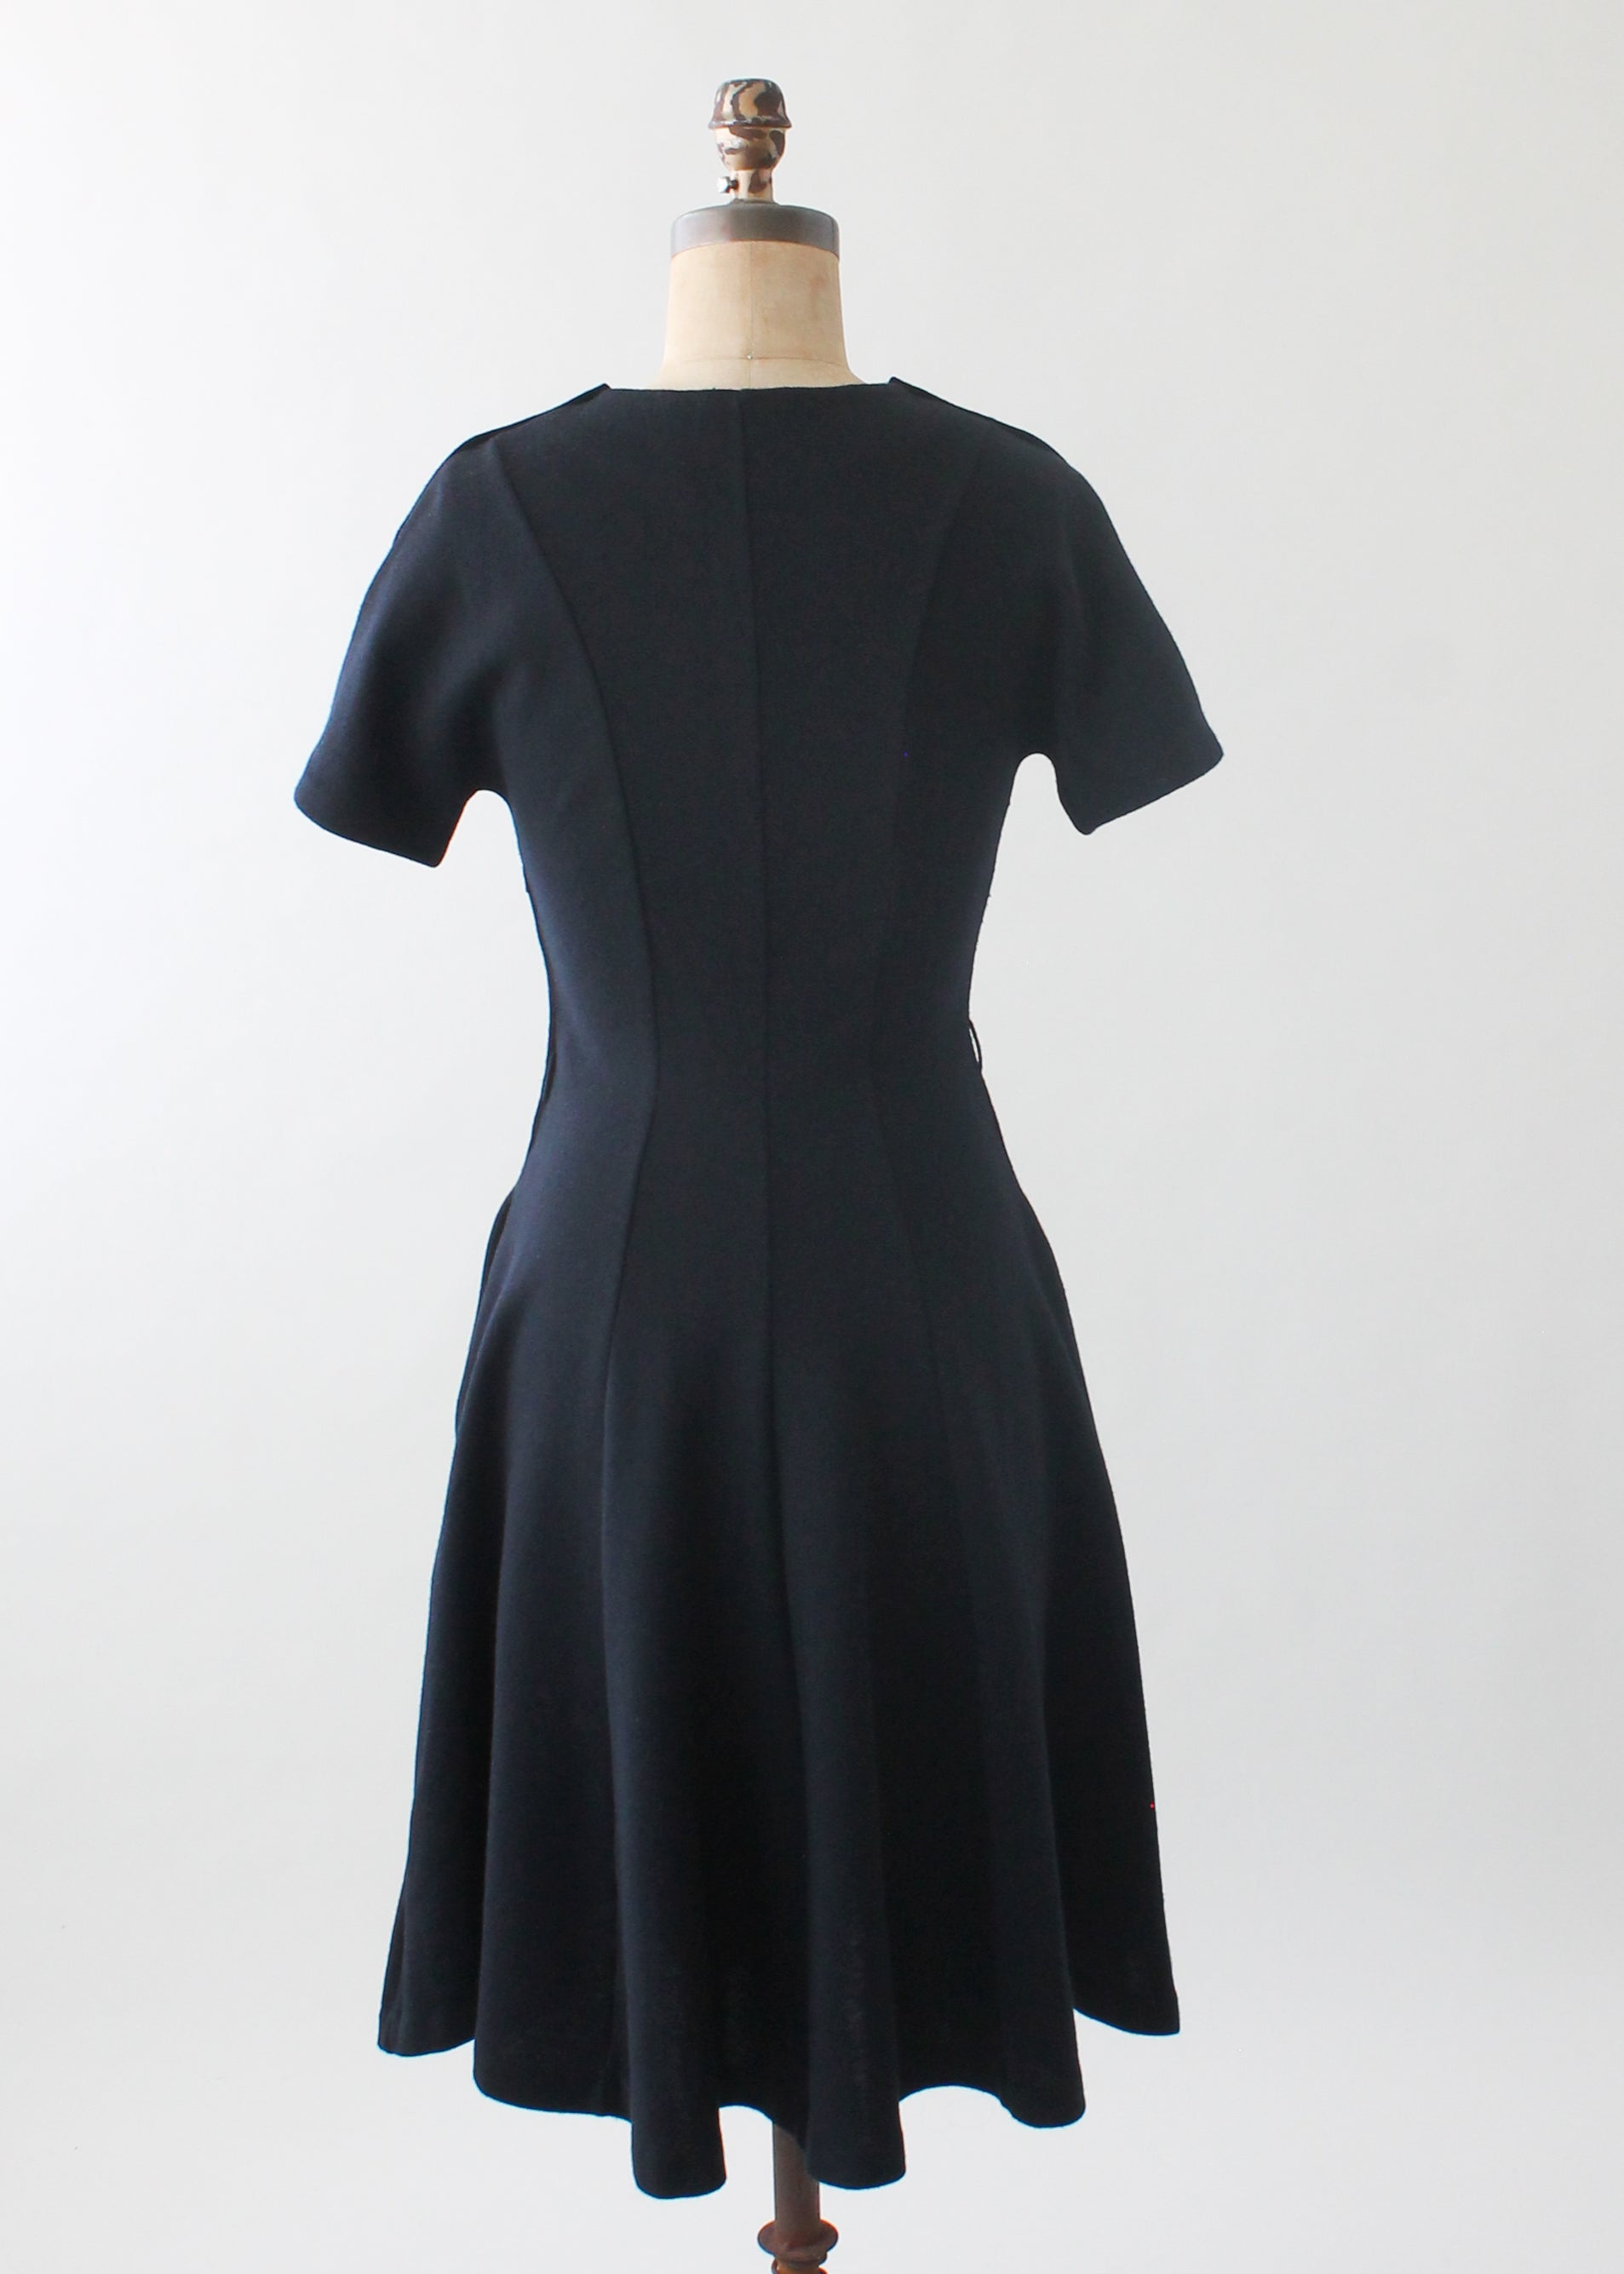 Vintage 1970s Crissa Italian Knit Little Black Dress - Raleigh Vintage